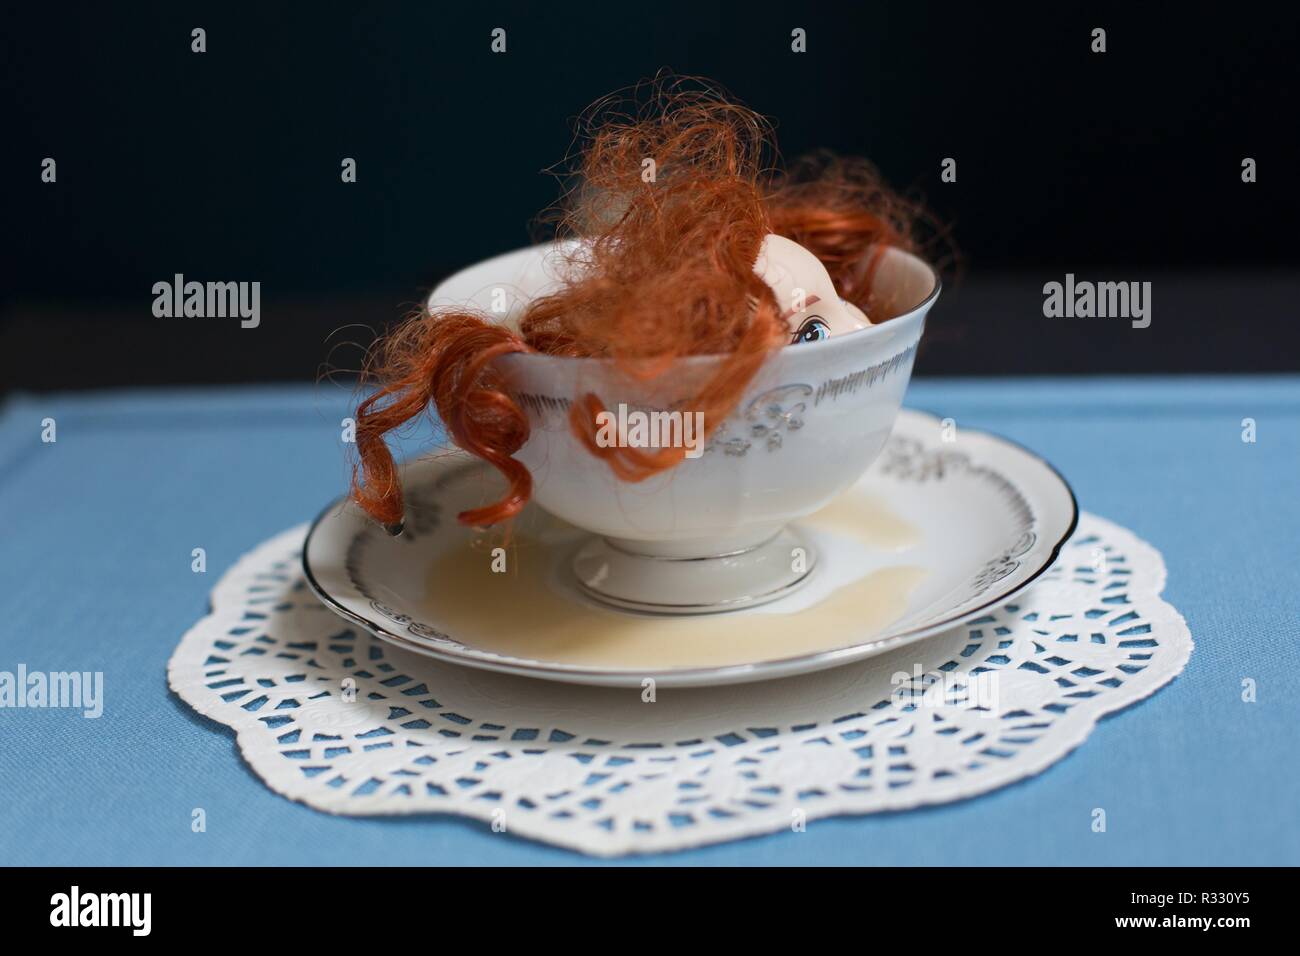 Immagine surreale di red-headed doll in una tazza di tè. Foto Stock